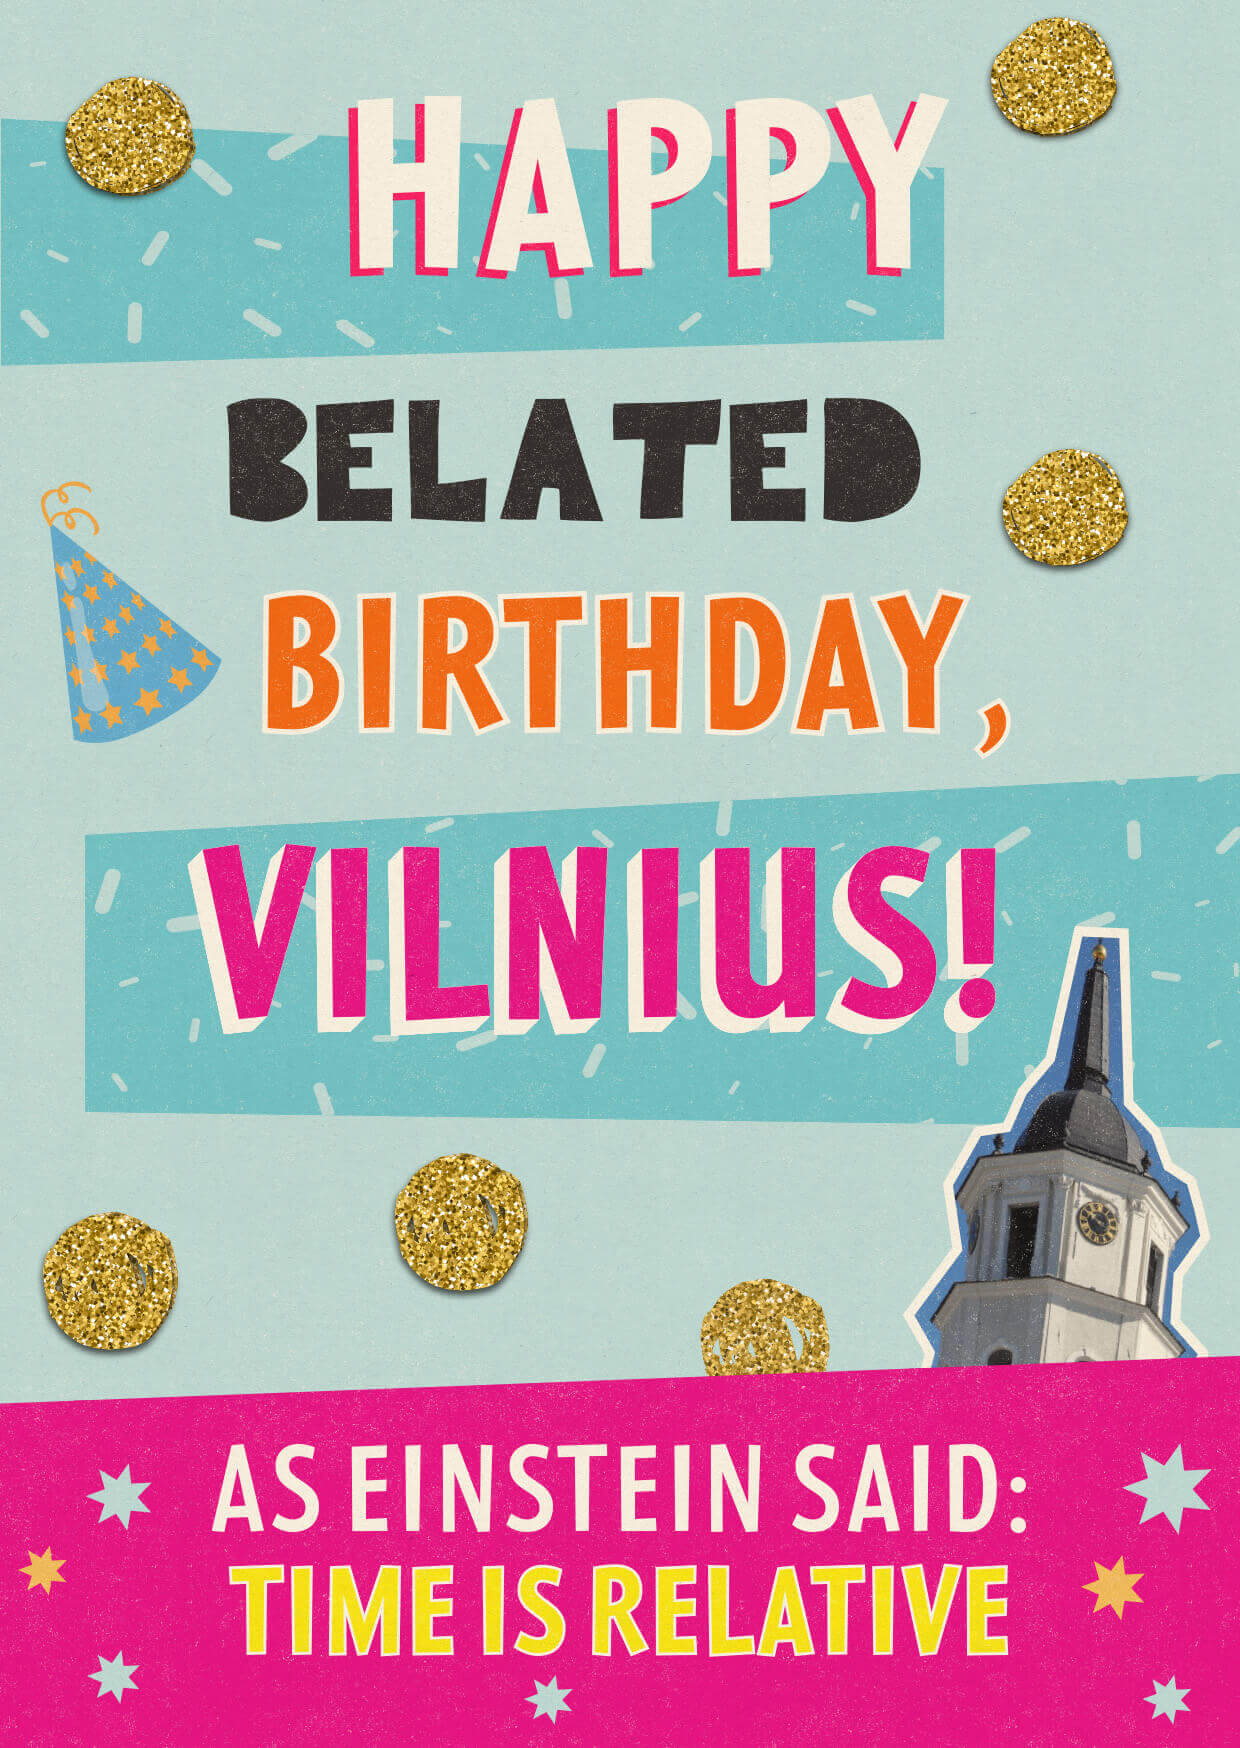 Postcard from Go Vilnius for Vilnius birthday